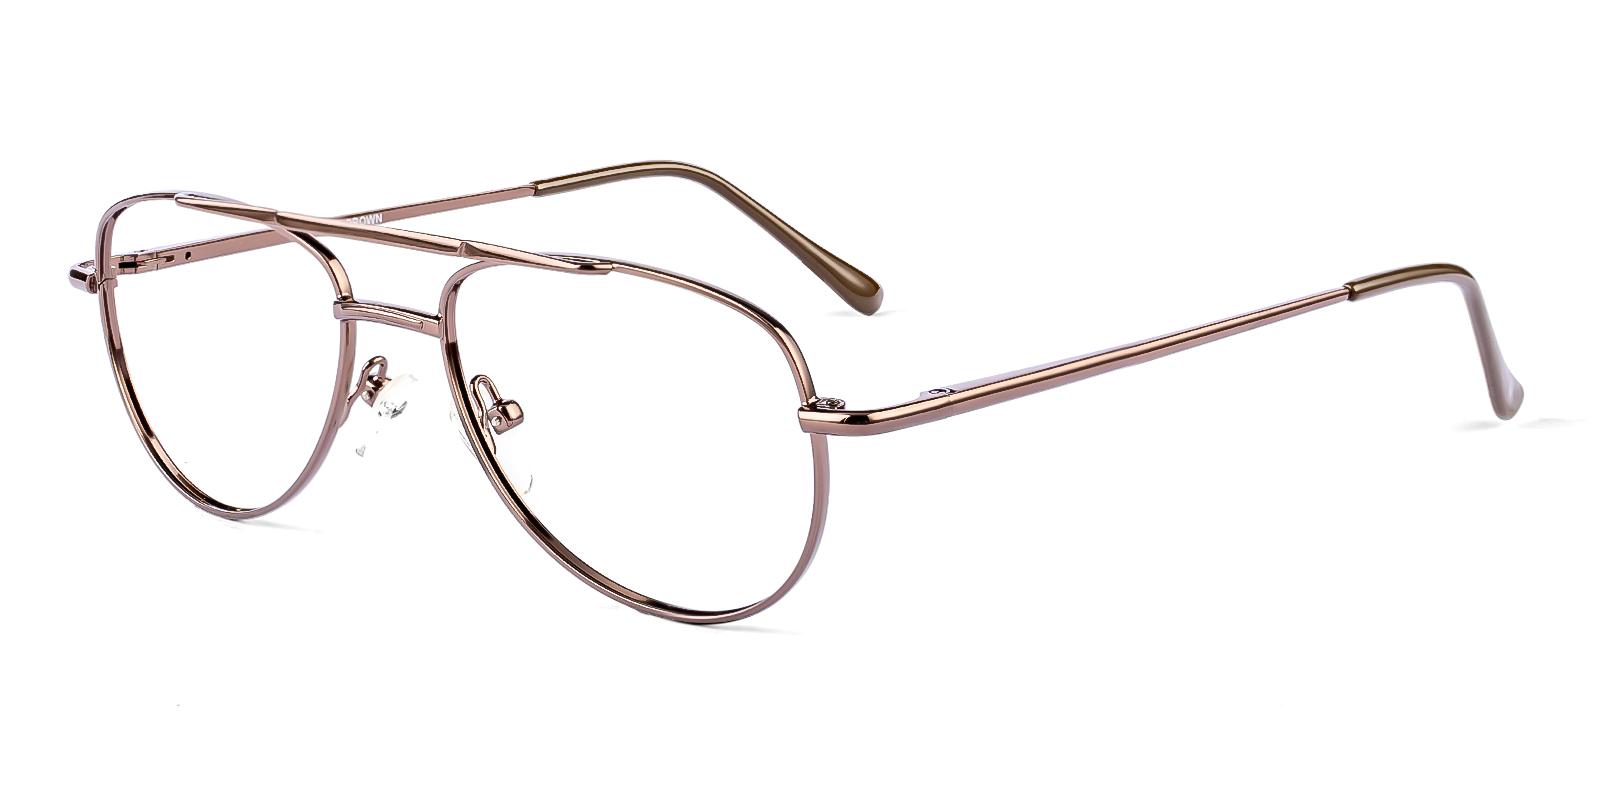 Extrpu Brown Metal Eyeglasses , NosePads , SpringHinges Frames from ABBE Glasses